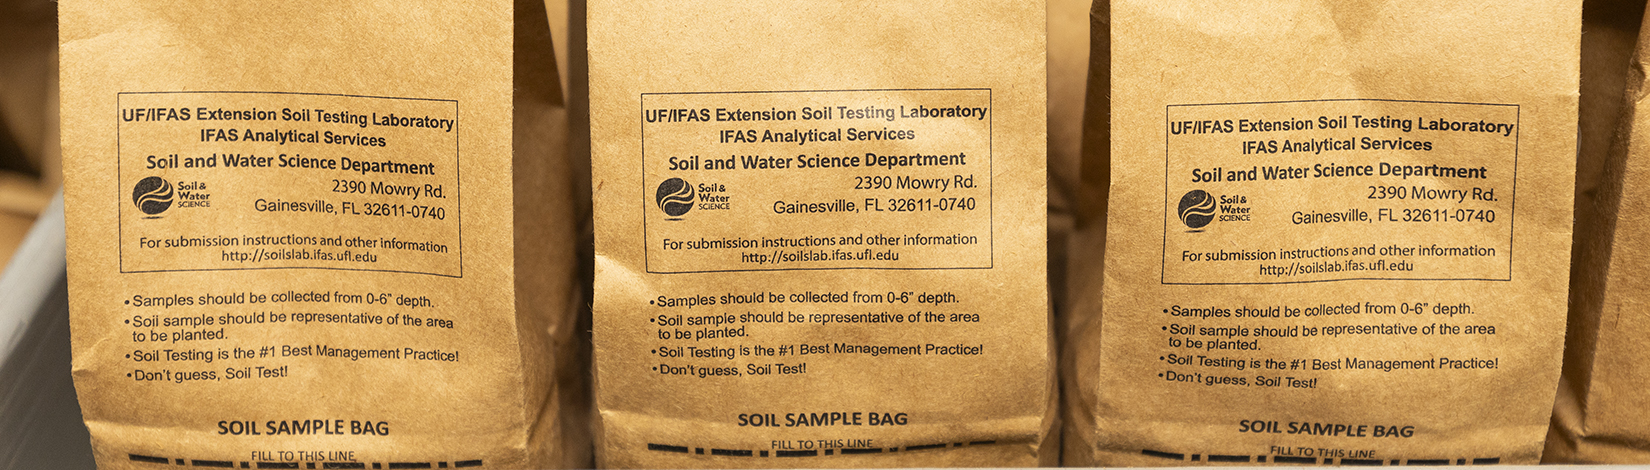 three soil sample bags close up view